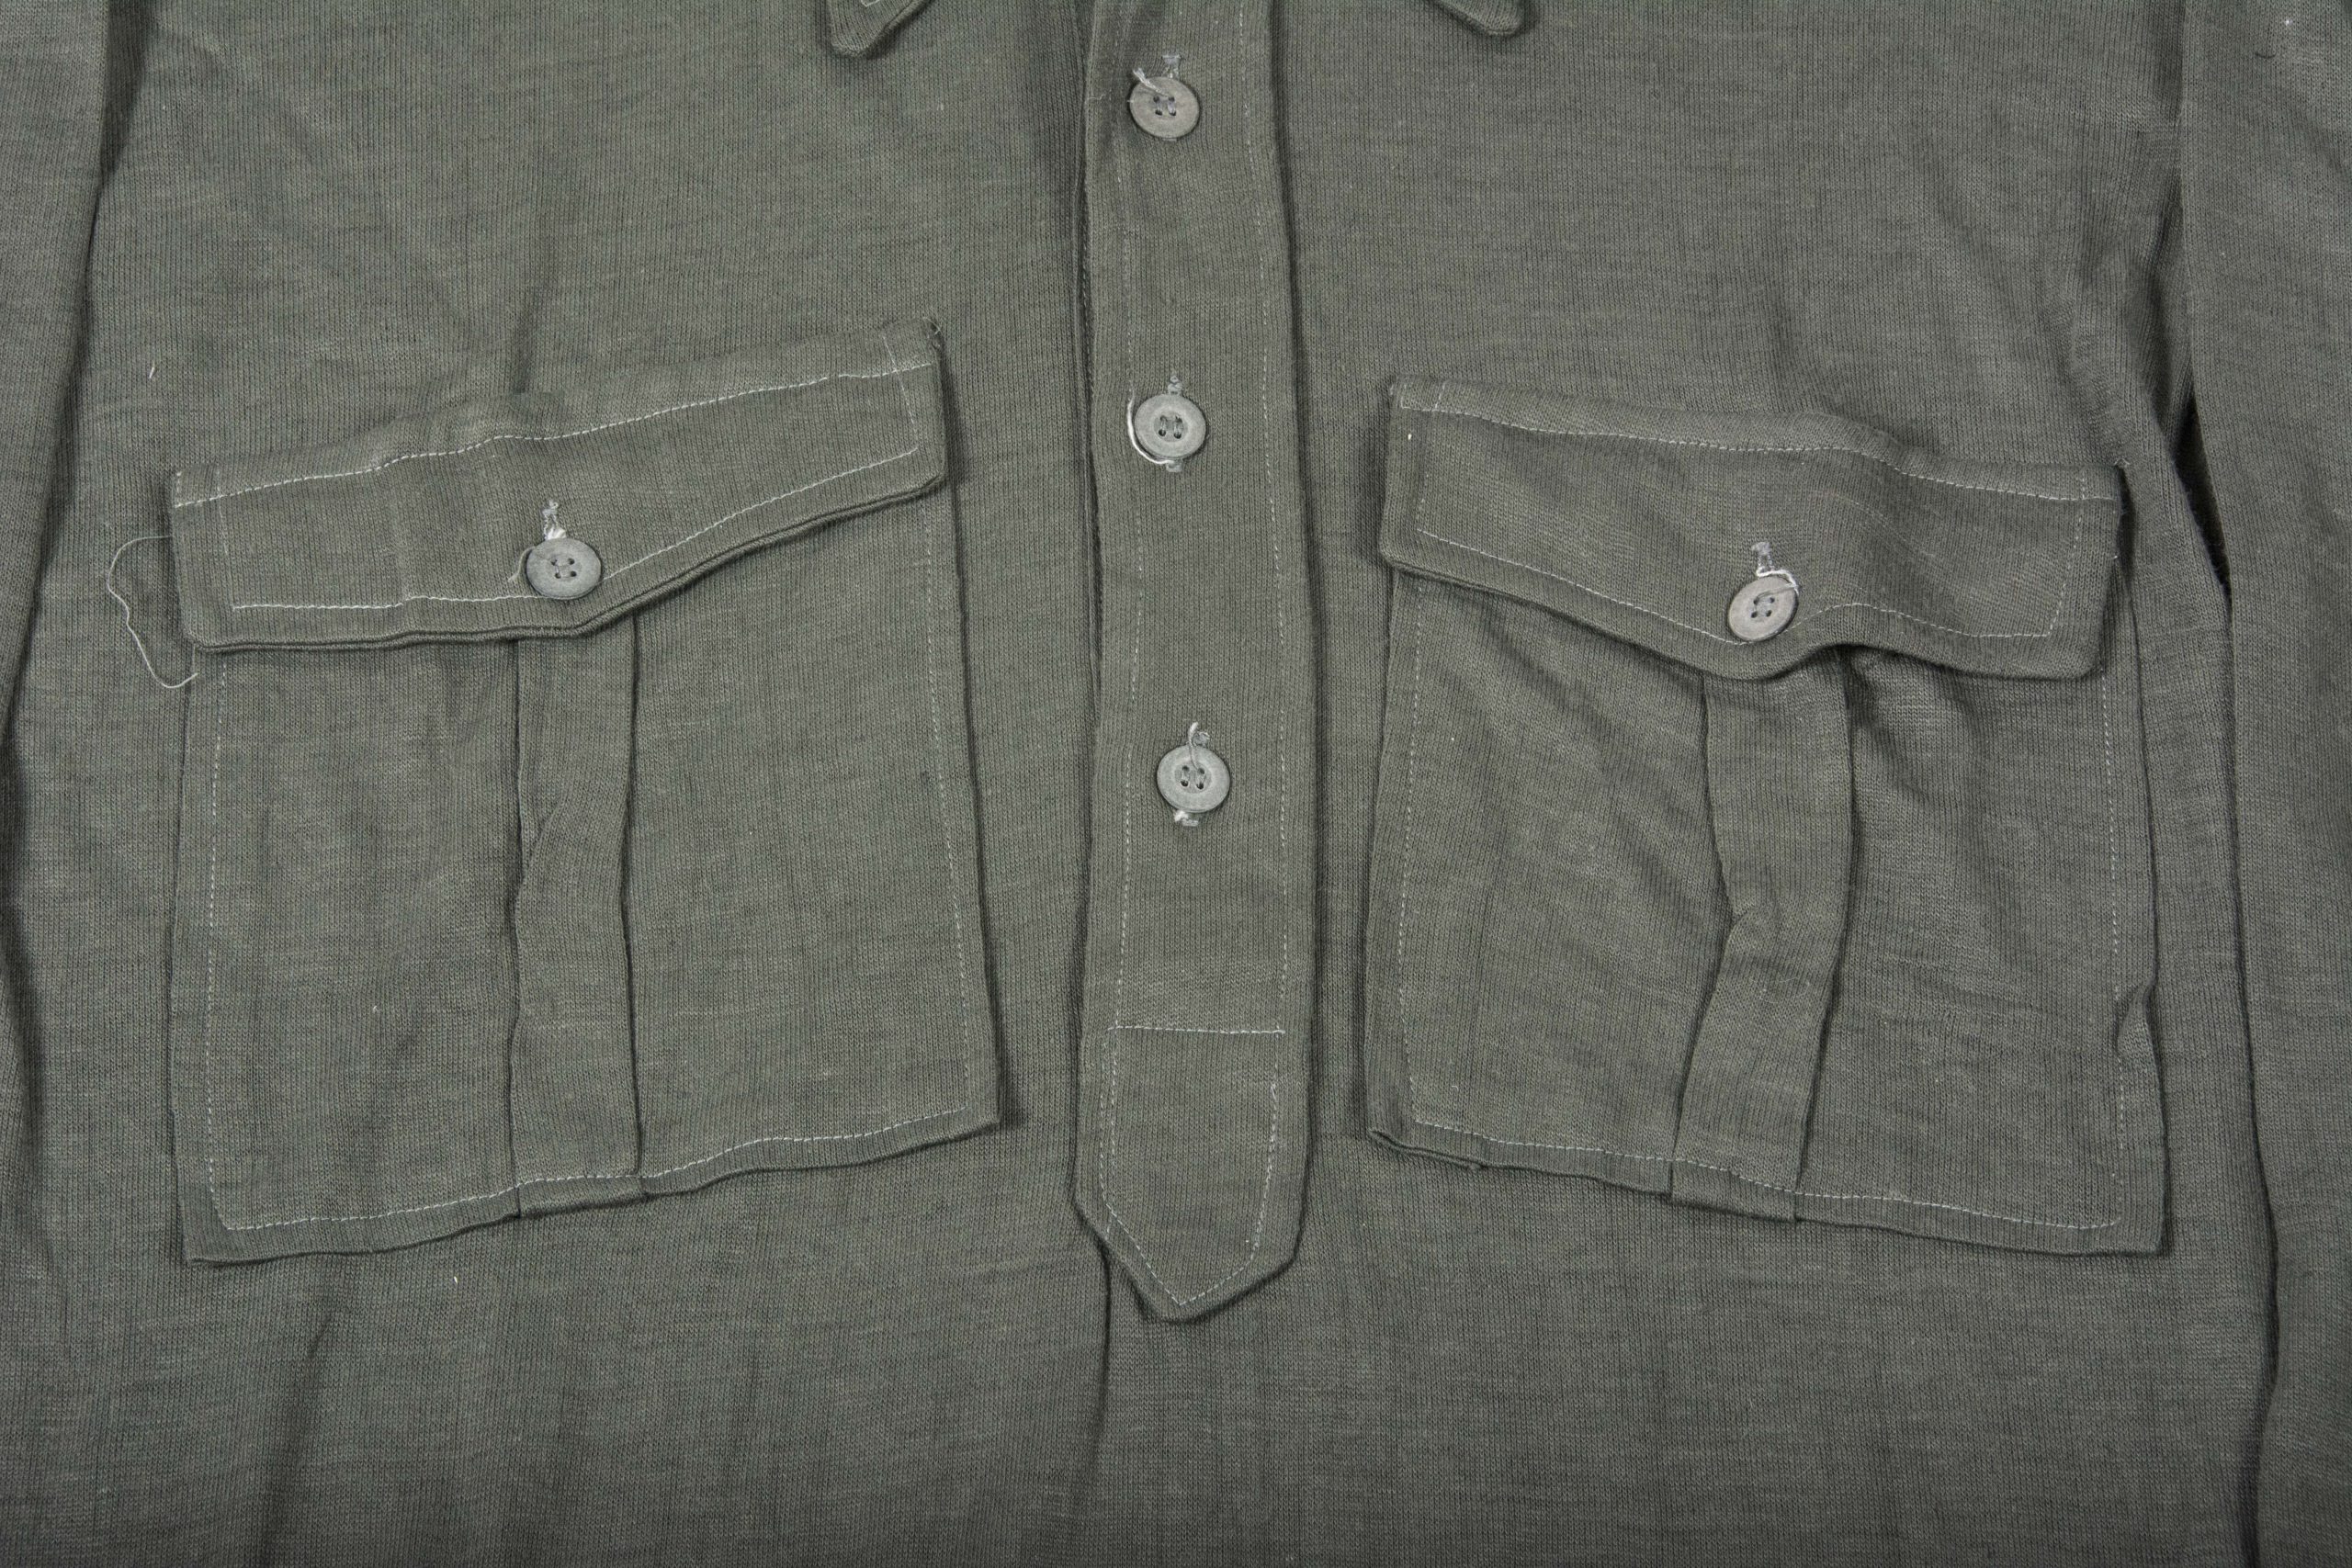 Heer/Waffen-SS pattern issue undershirt – fjm44